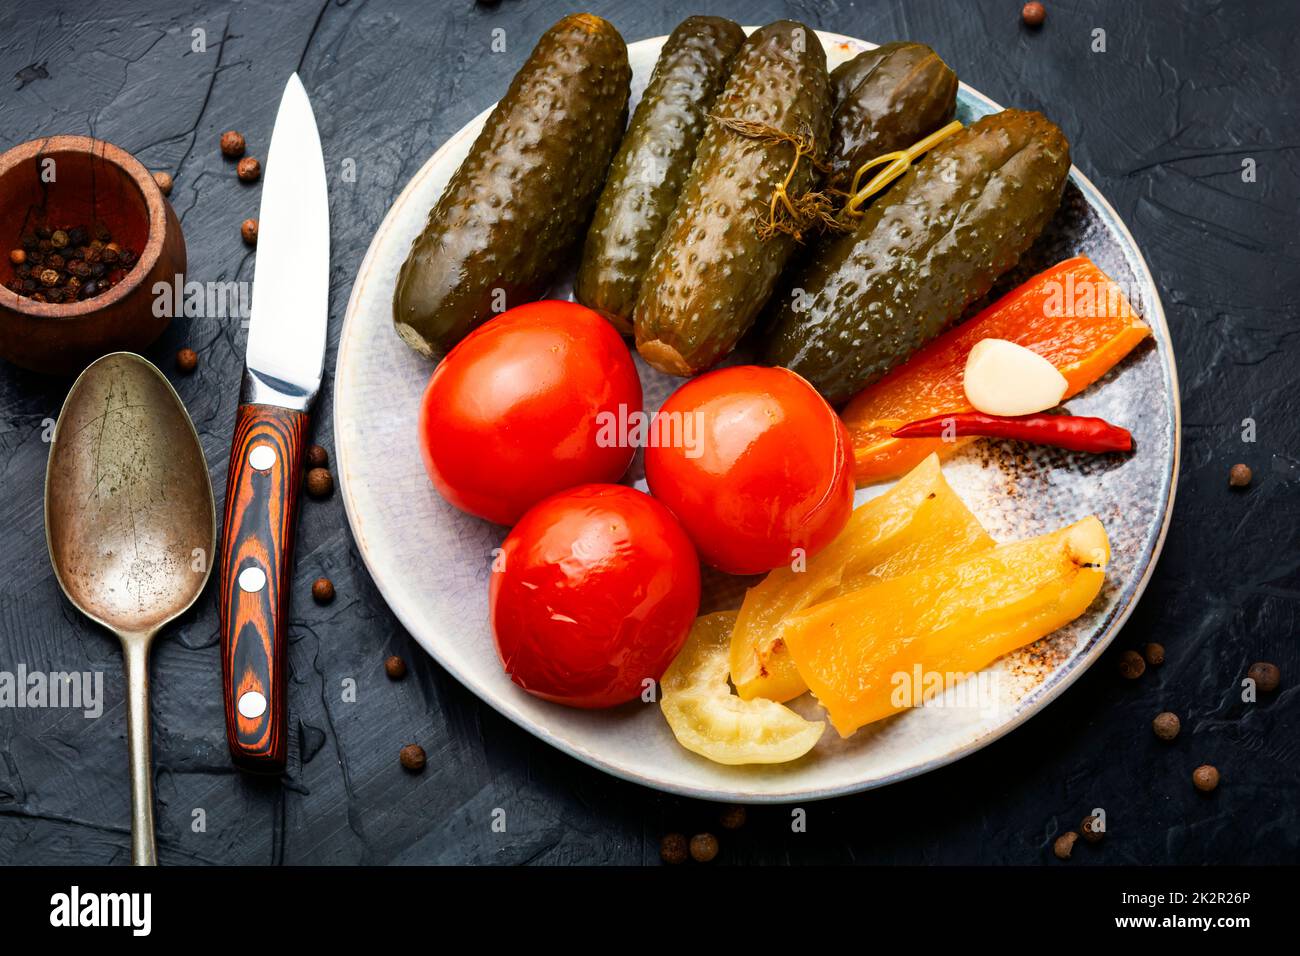 Pickles, pickled vegetables Stock Photo